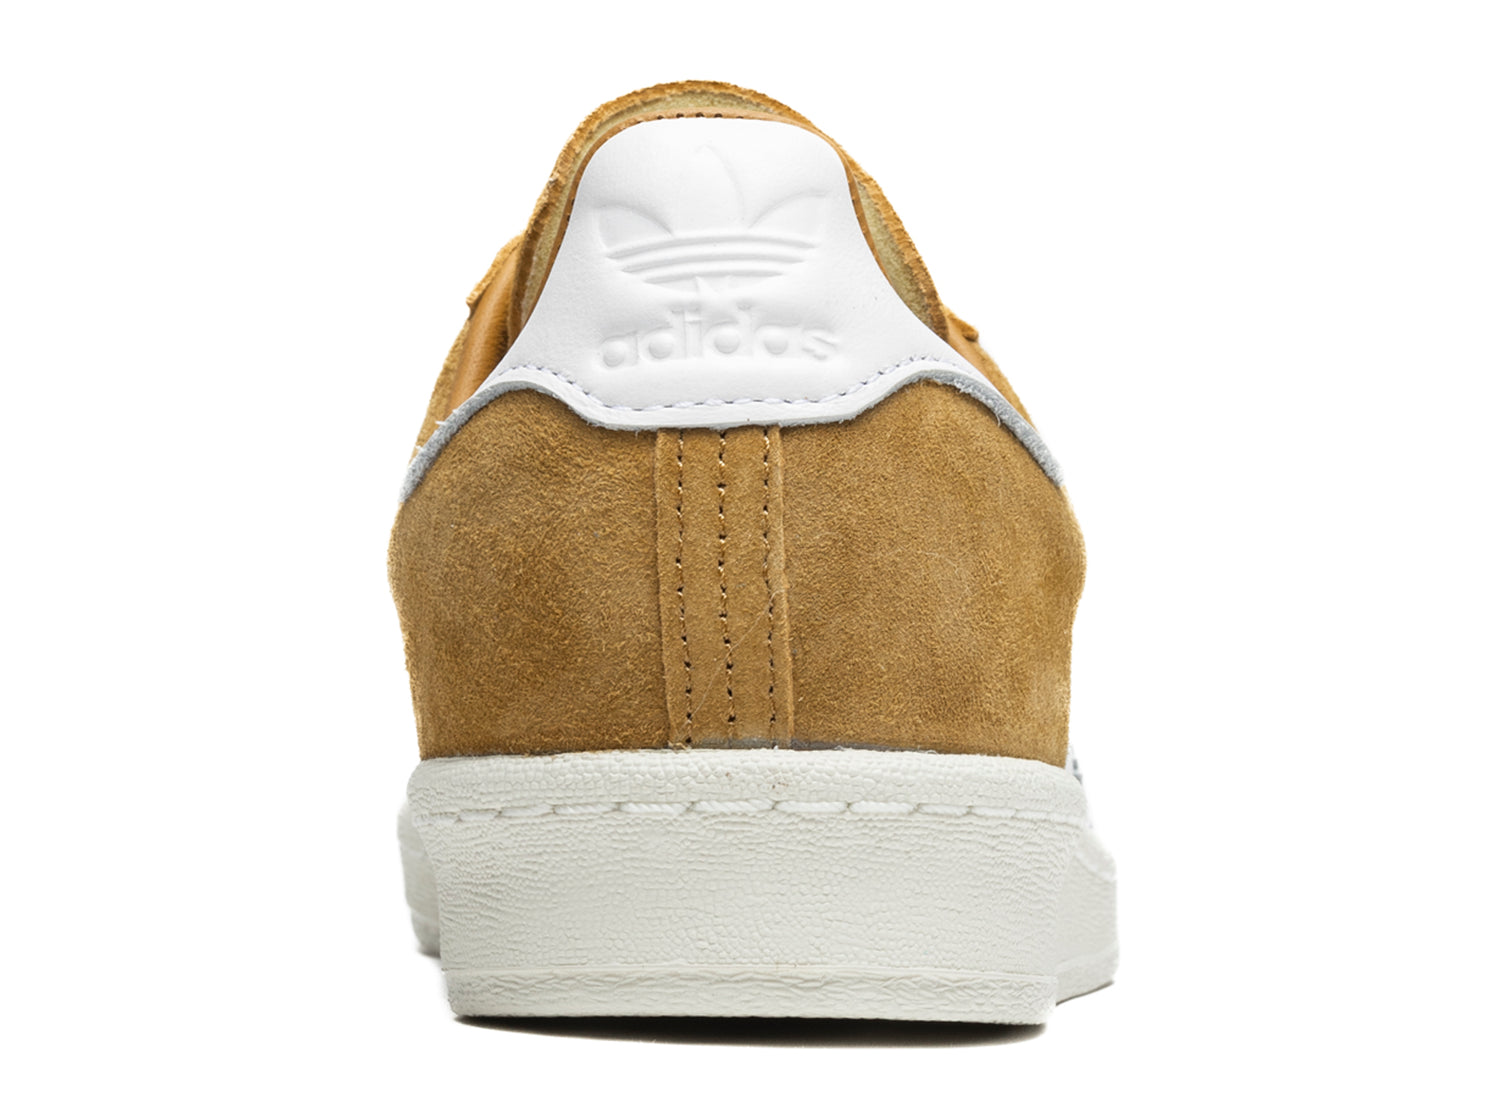 Adidas Originals Campus Supreme Shoes 'Mesa Cloud White' IE2222